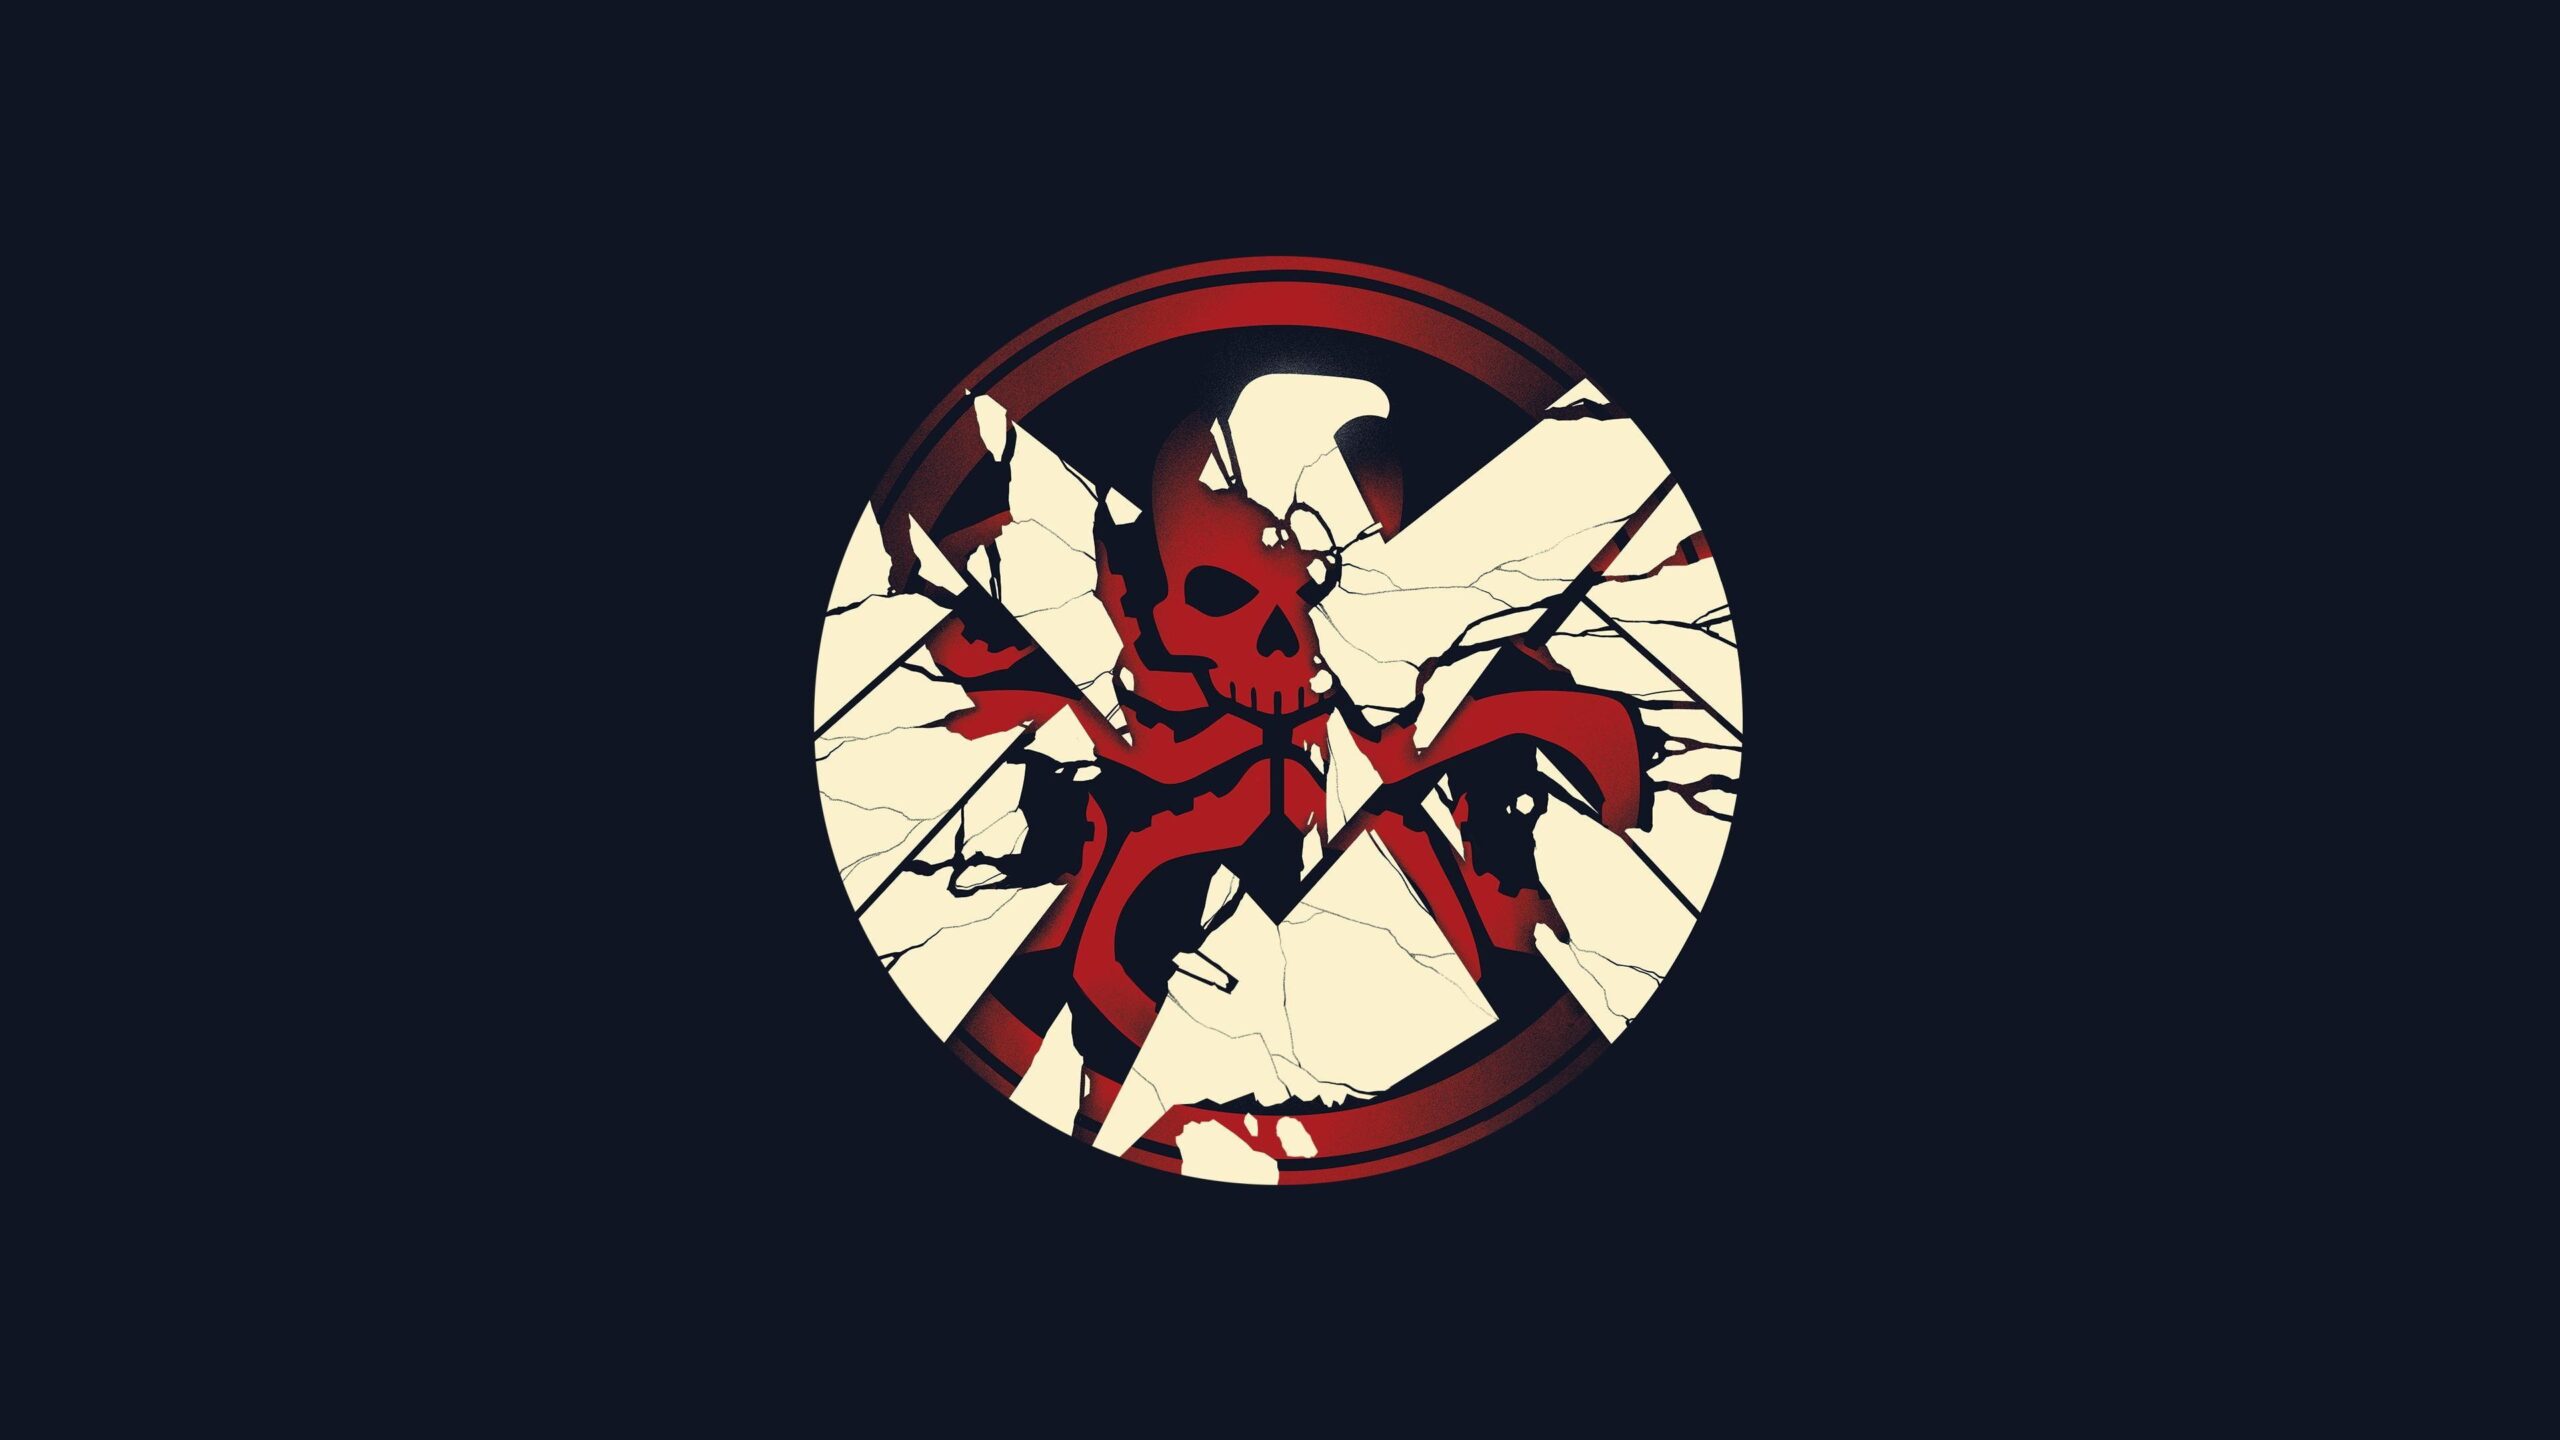 Red skull logo 2K wallpapers